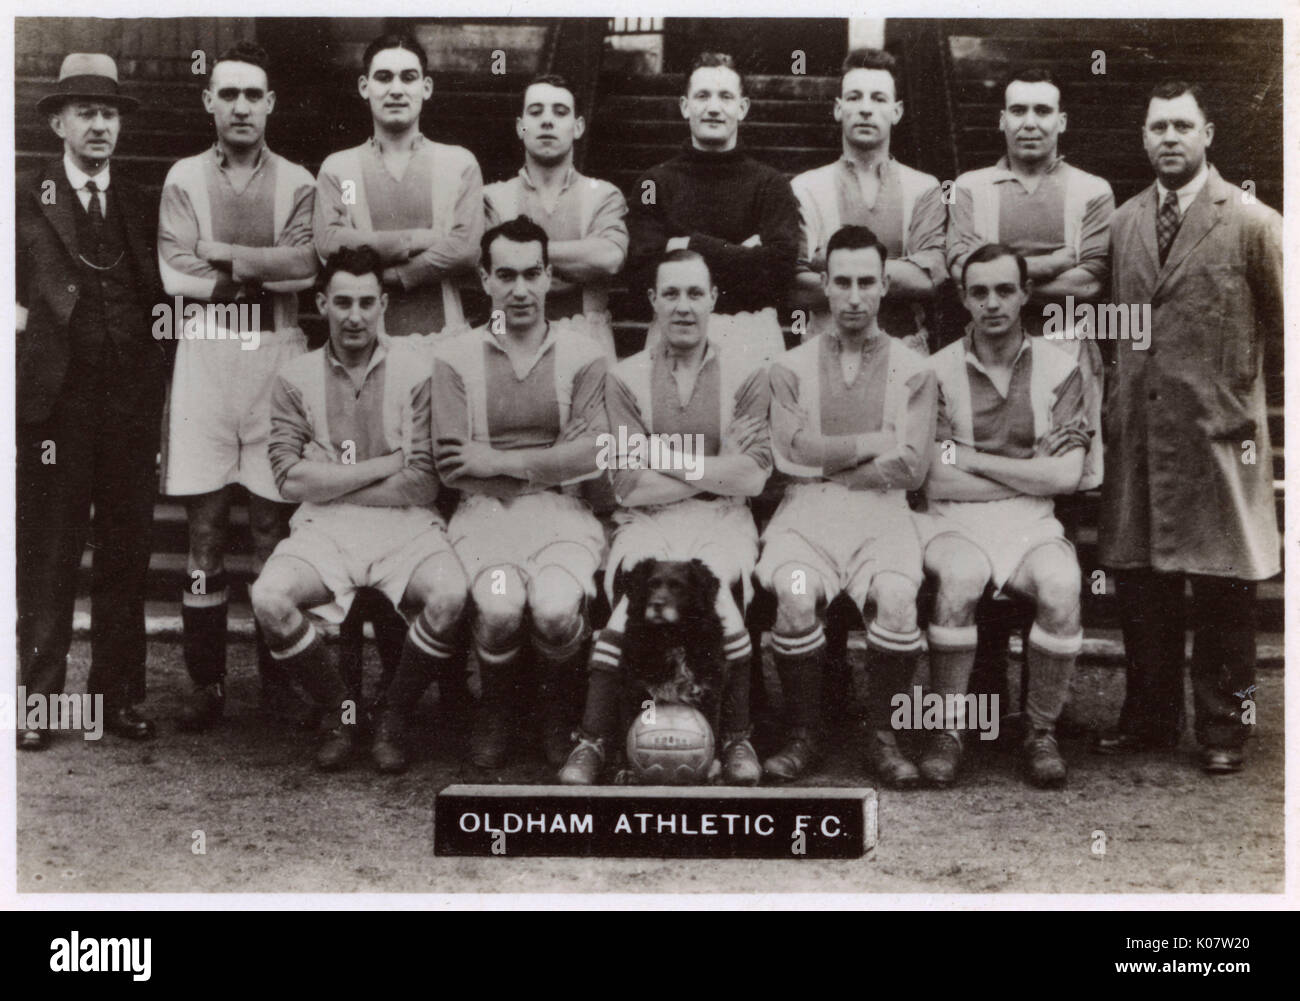 Oldham Athletic FC football team 1936. Back row: Mellor (Secretary), Gray, Brunskill, Hilton, Church, Seymour (Captain), Robson, Tufnell (Trainer). Front row: Agar, Davis, Walsh, Leedham, Buckley.     Date: 1936 Stock Photo